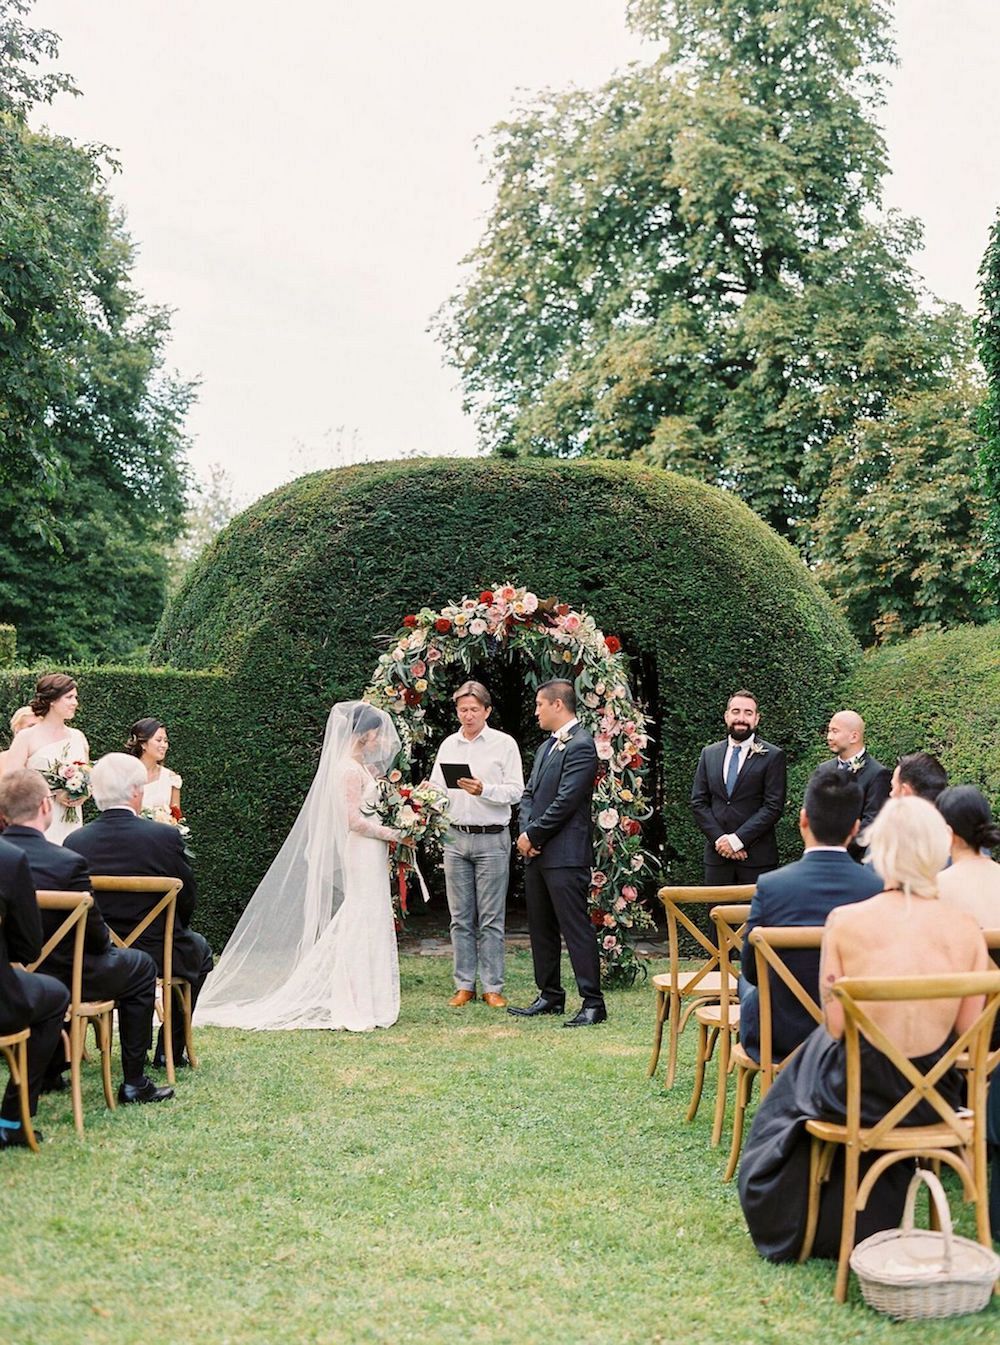 Ven and Adrian's Garden Wedding in France